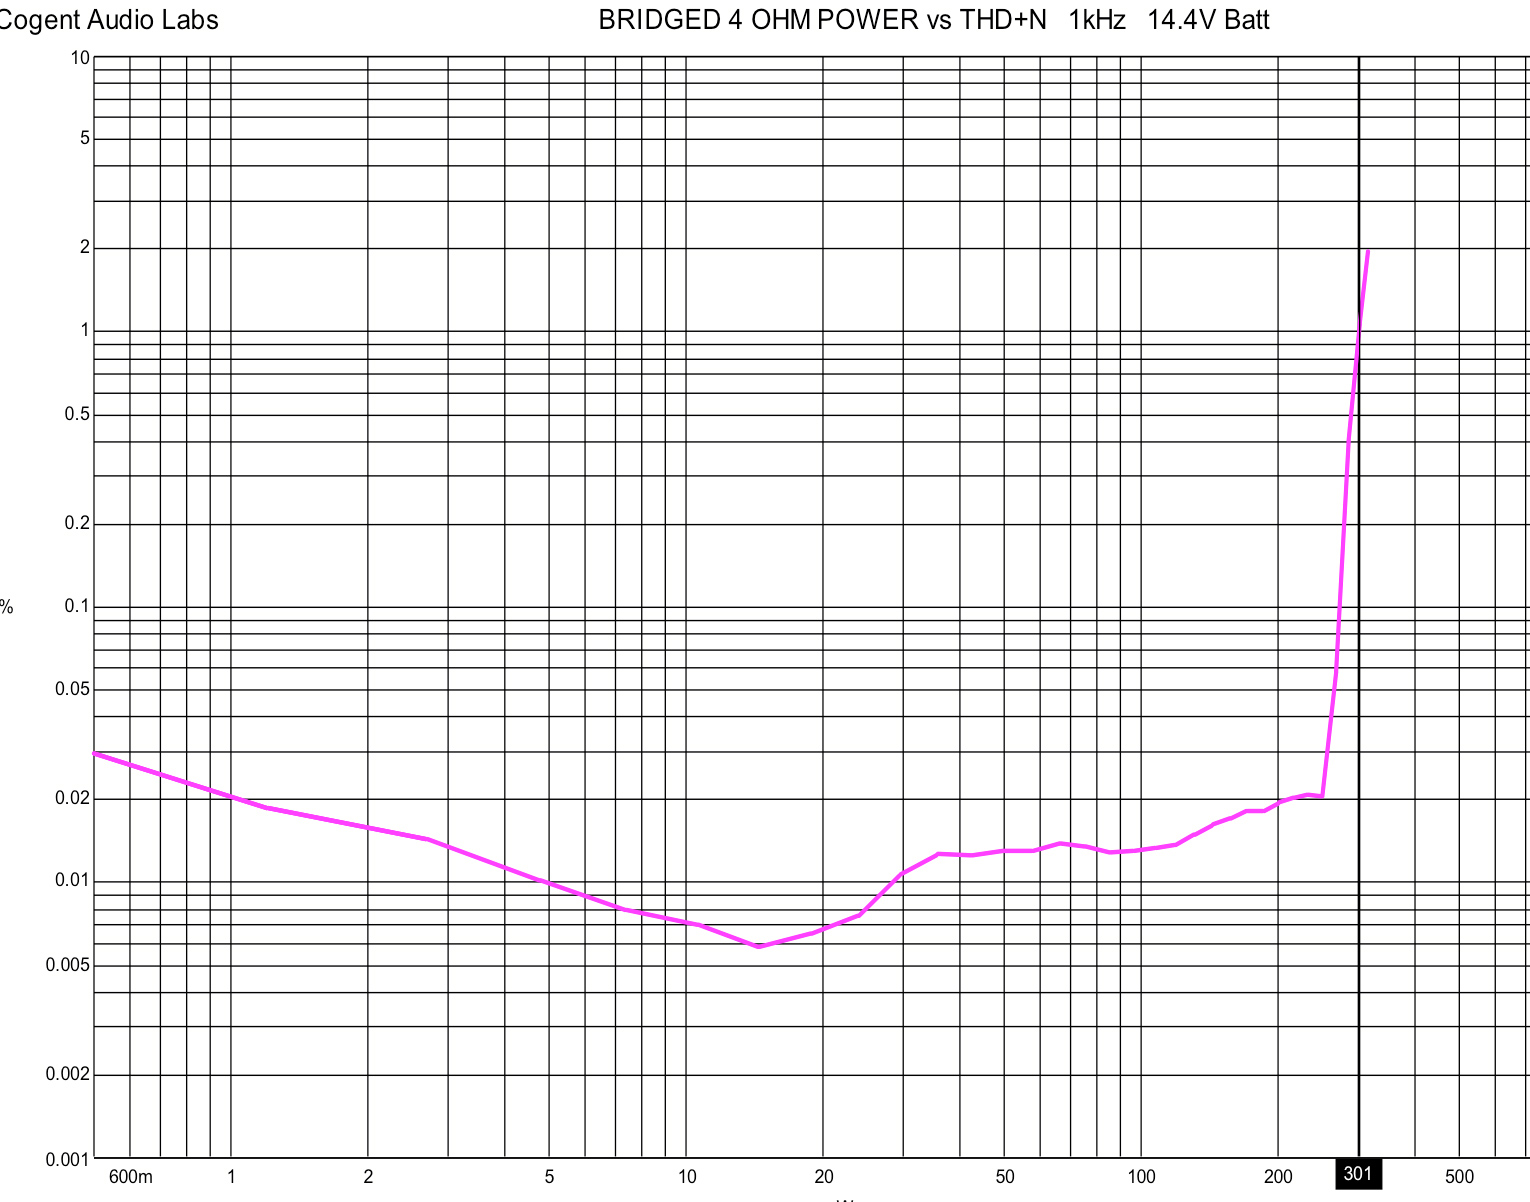 Bridged 4 OHM Power vs THD+N 1kHz 14.4V Batt